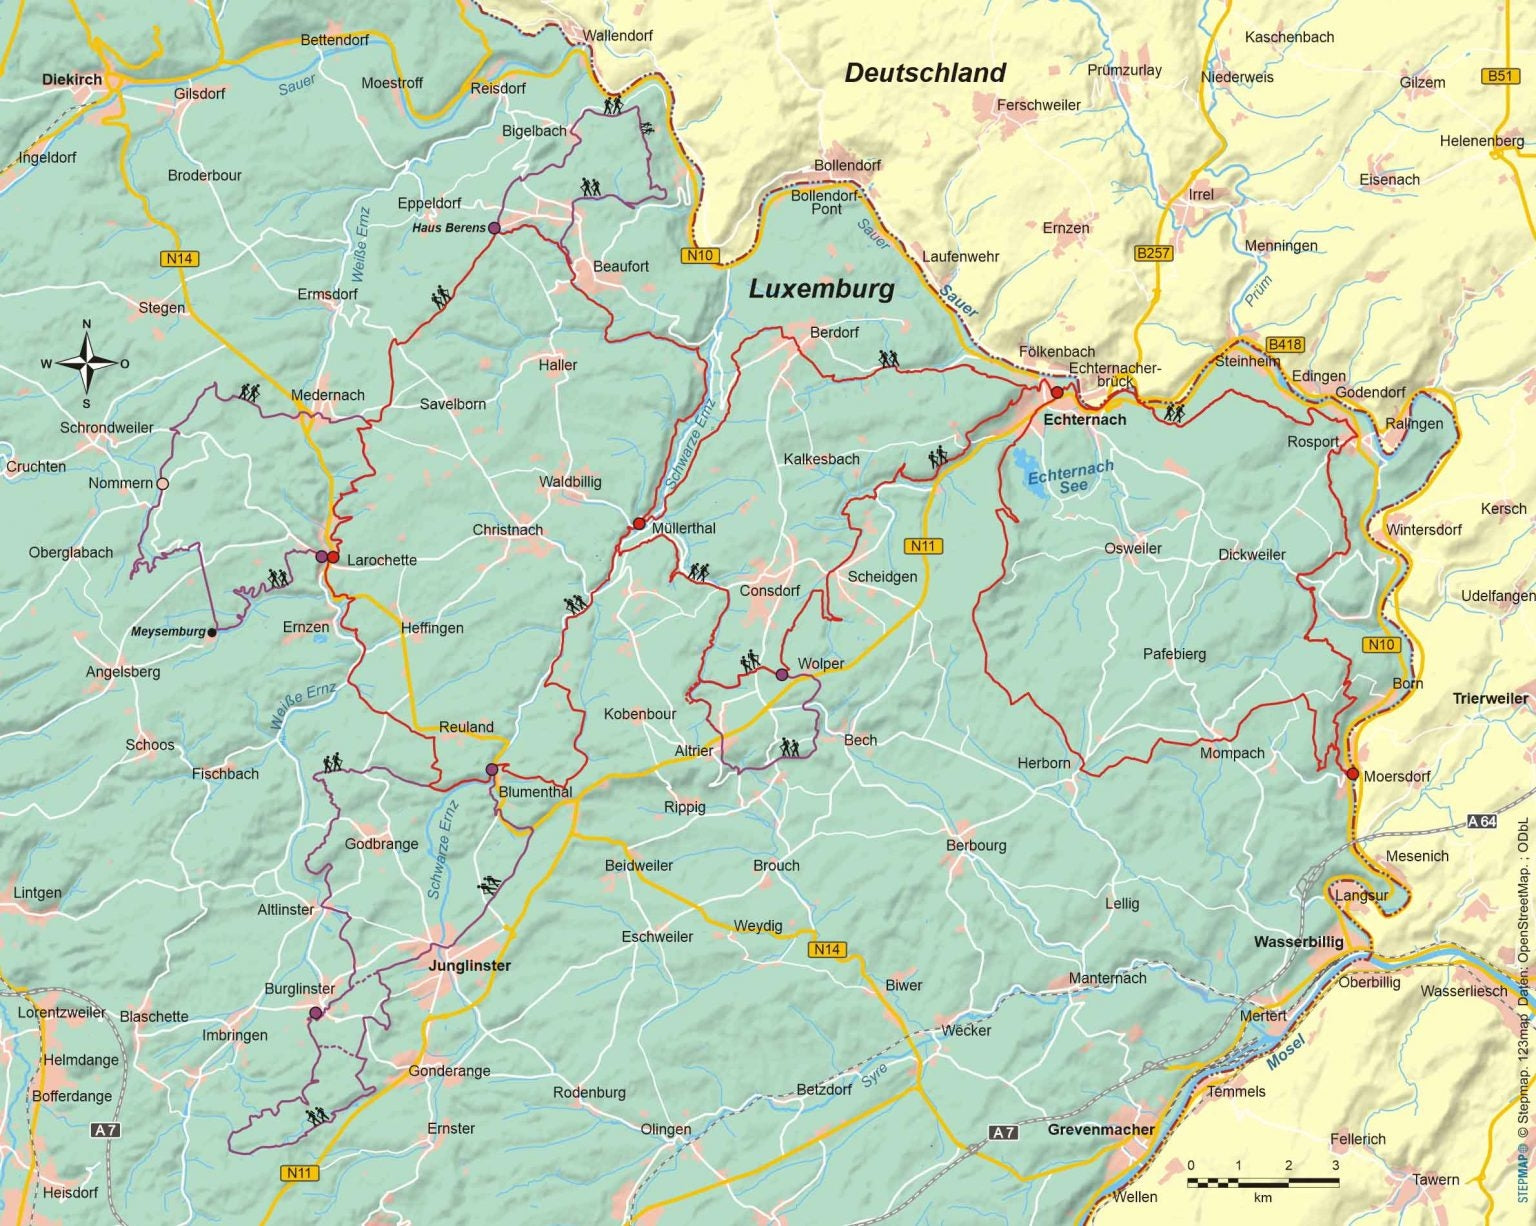 Wandelgids Luxemburg: Mullerthal Trail (266)